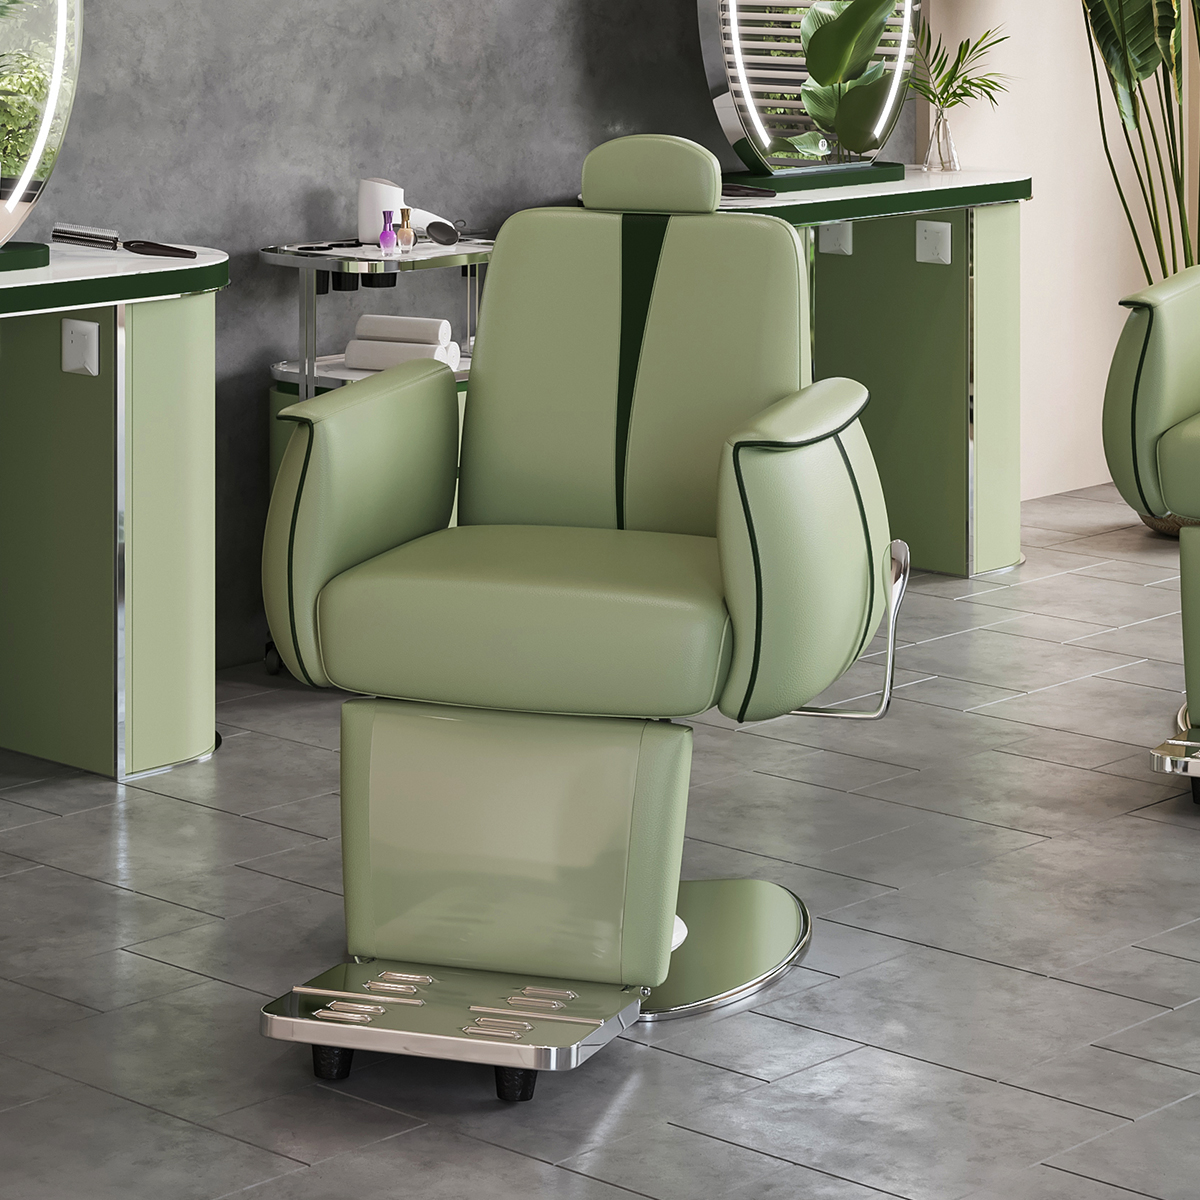 Glorall green salon furniture barber chair makeup chair beauty chair for beauty salon studio- (3)